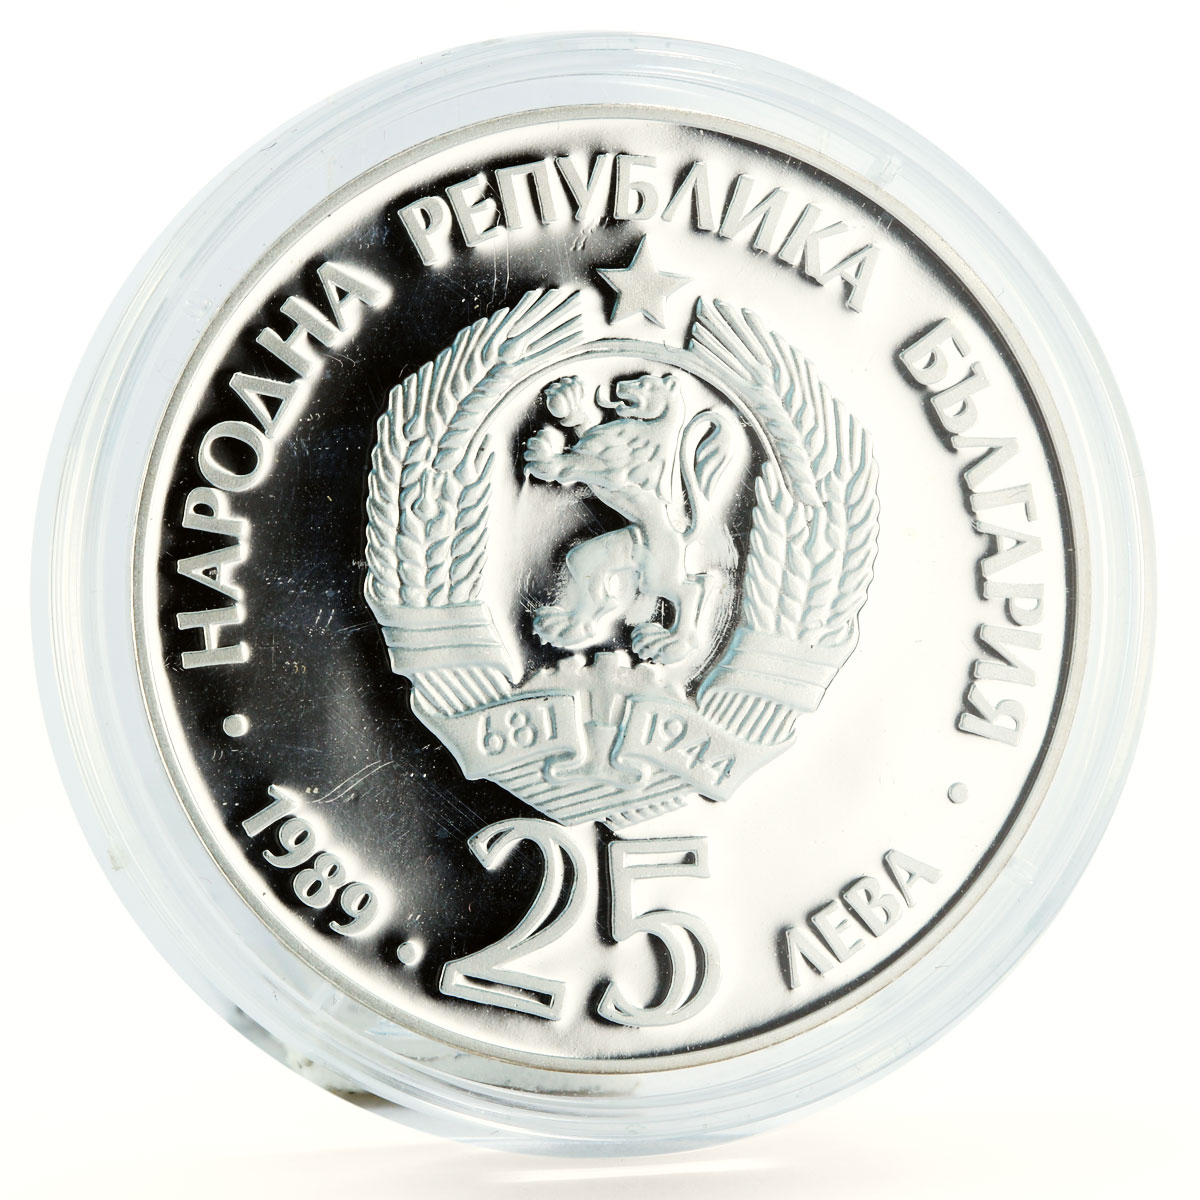 Bulgaria 25 leva Endangered Wildlife Bears Forest proof silver coin 1989